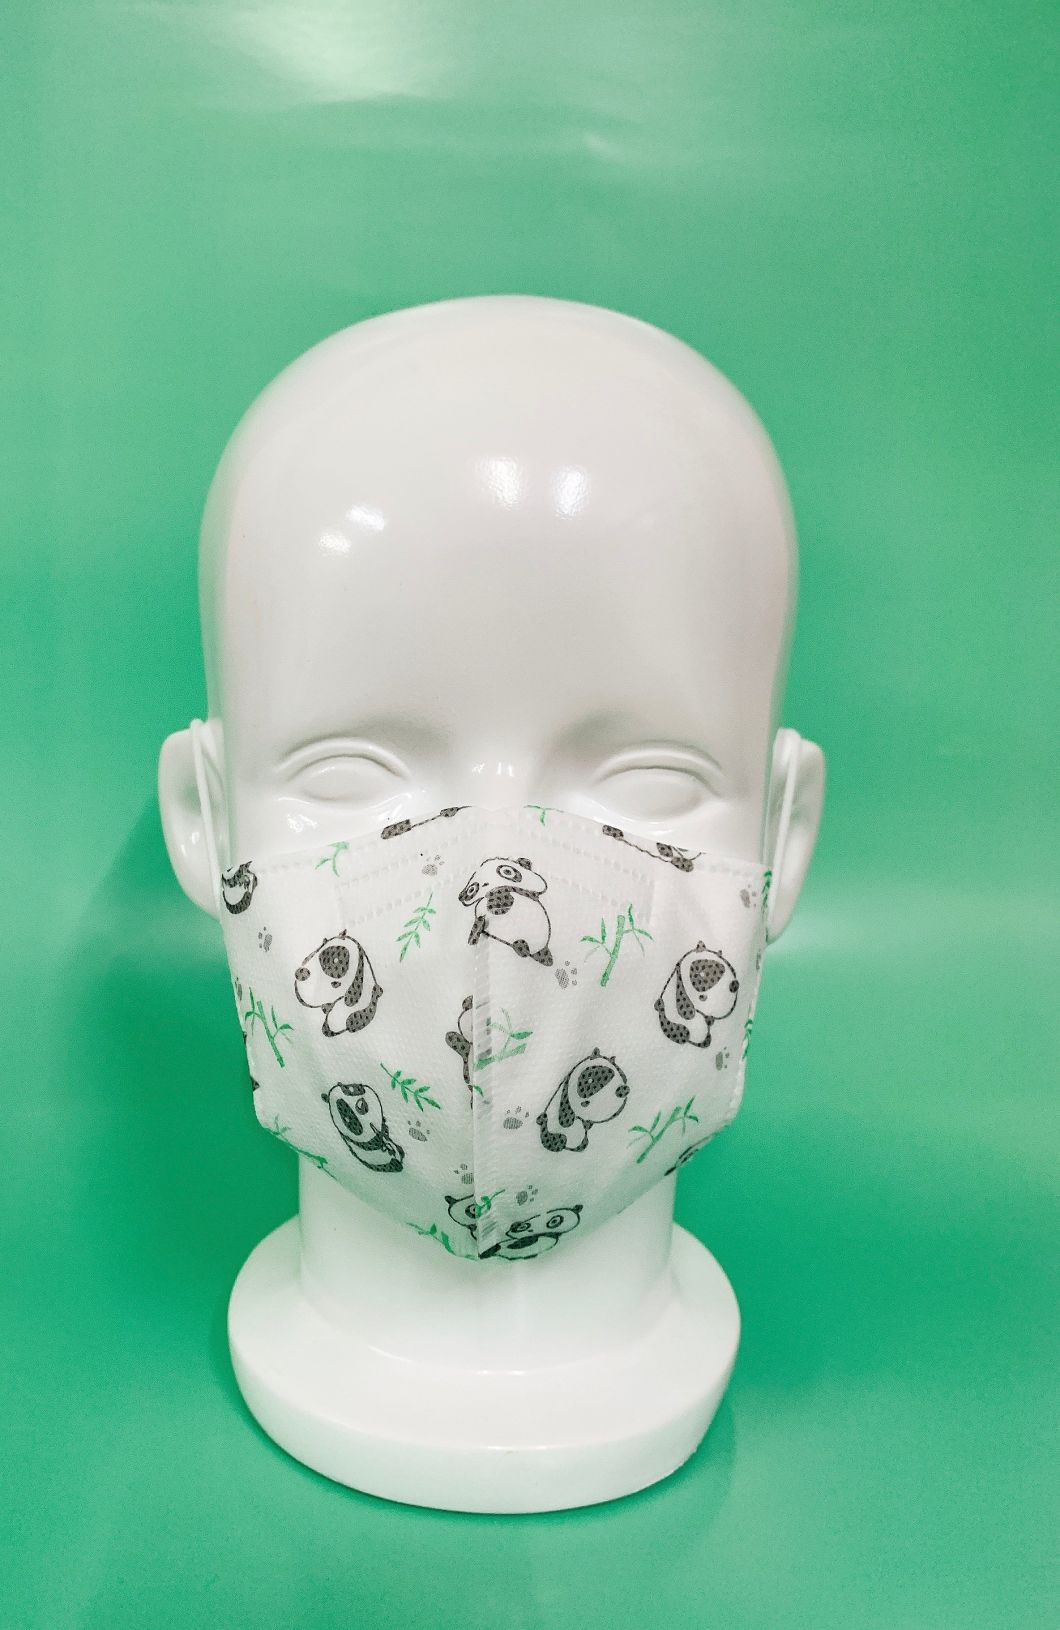 -Masks Factory Direct Virus-Revention Children Protective KN95 FFP2 N95 Face Masks